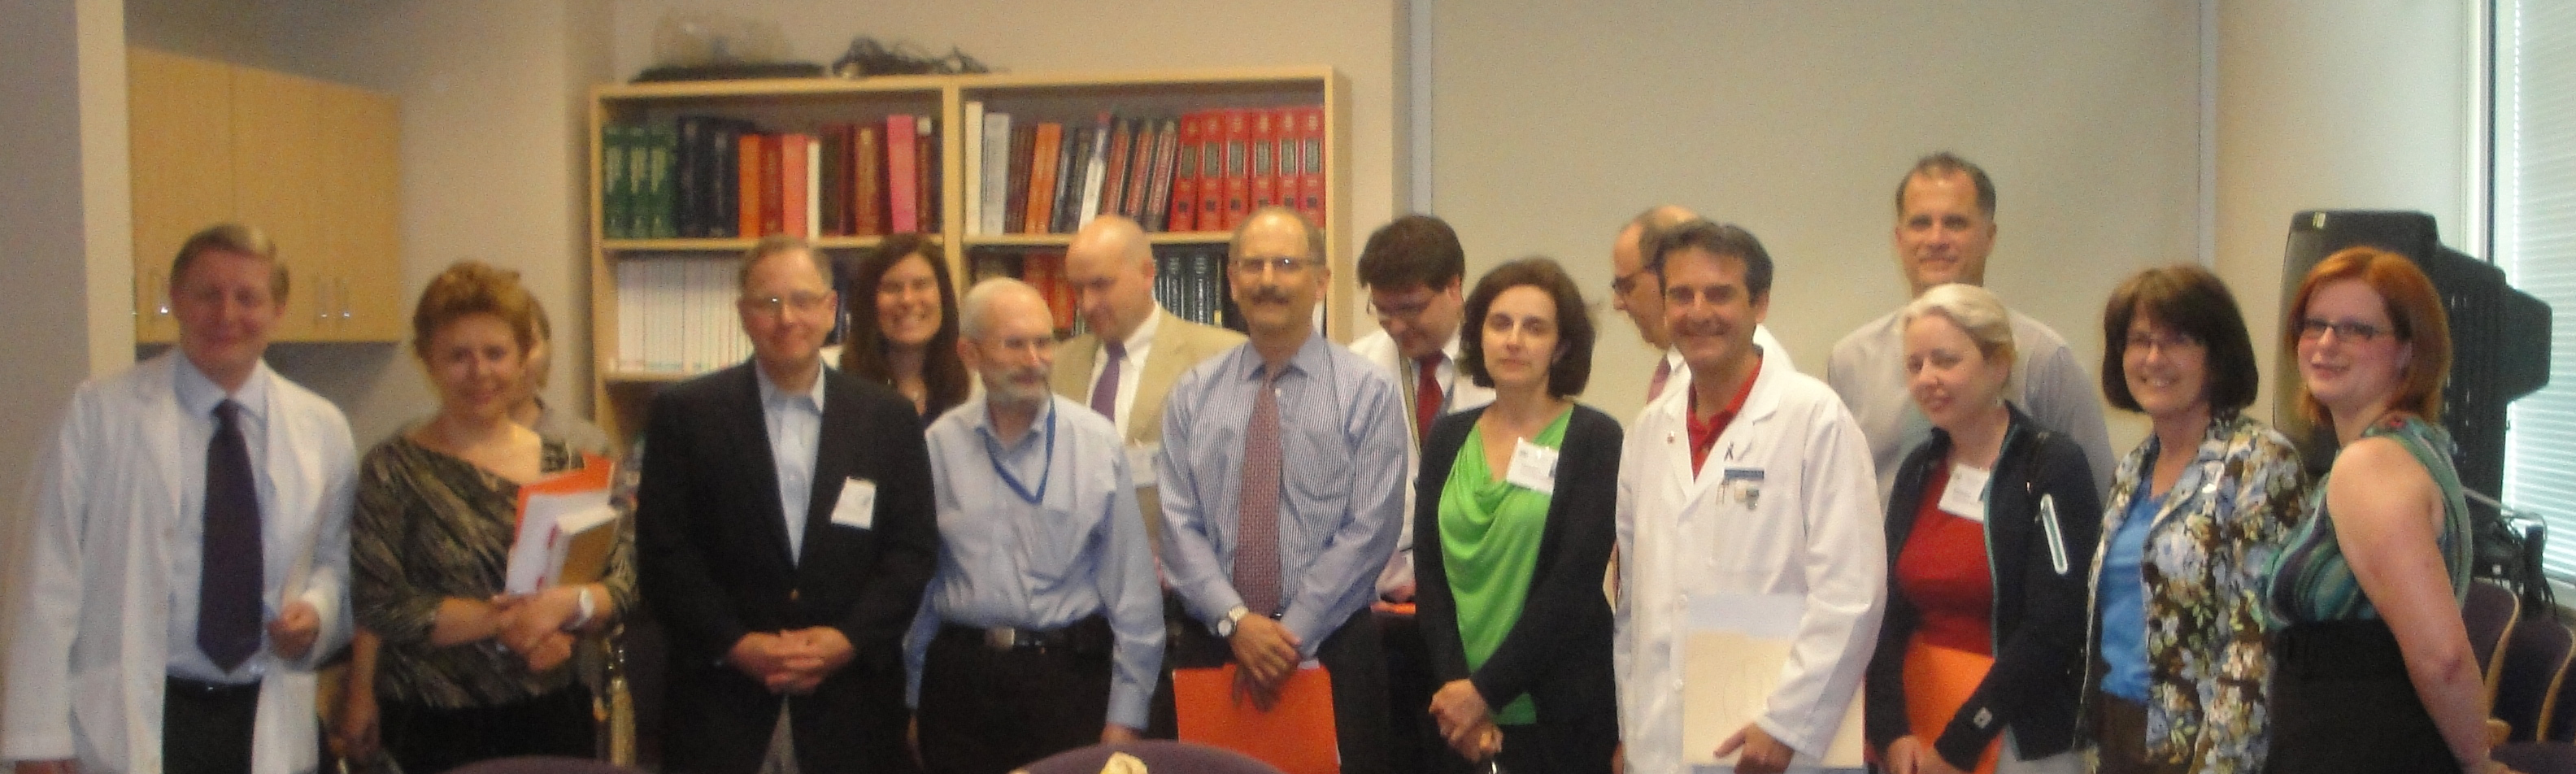 NIH Clinic Participants